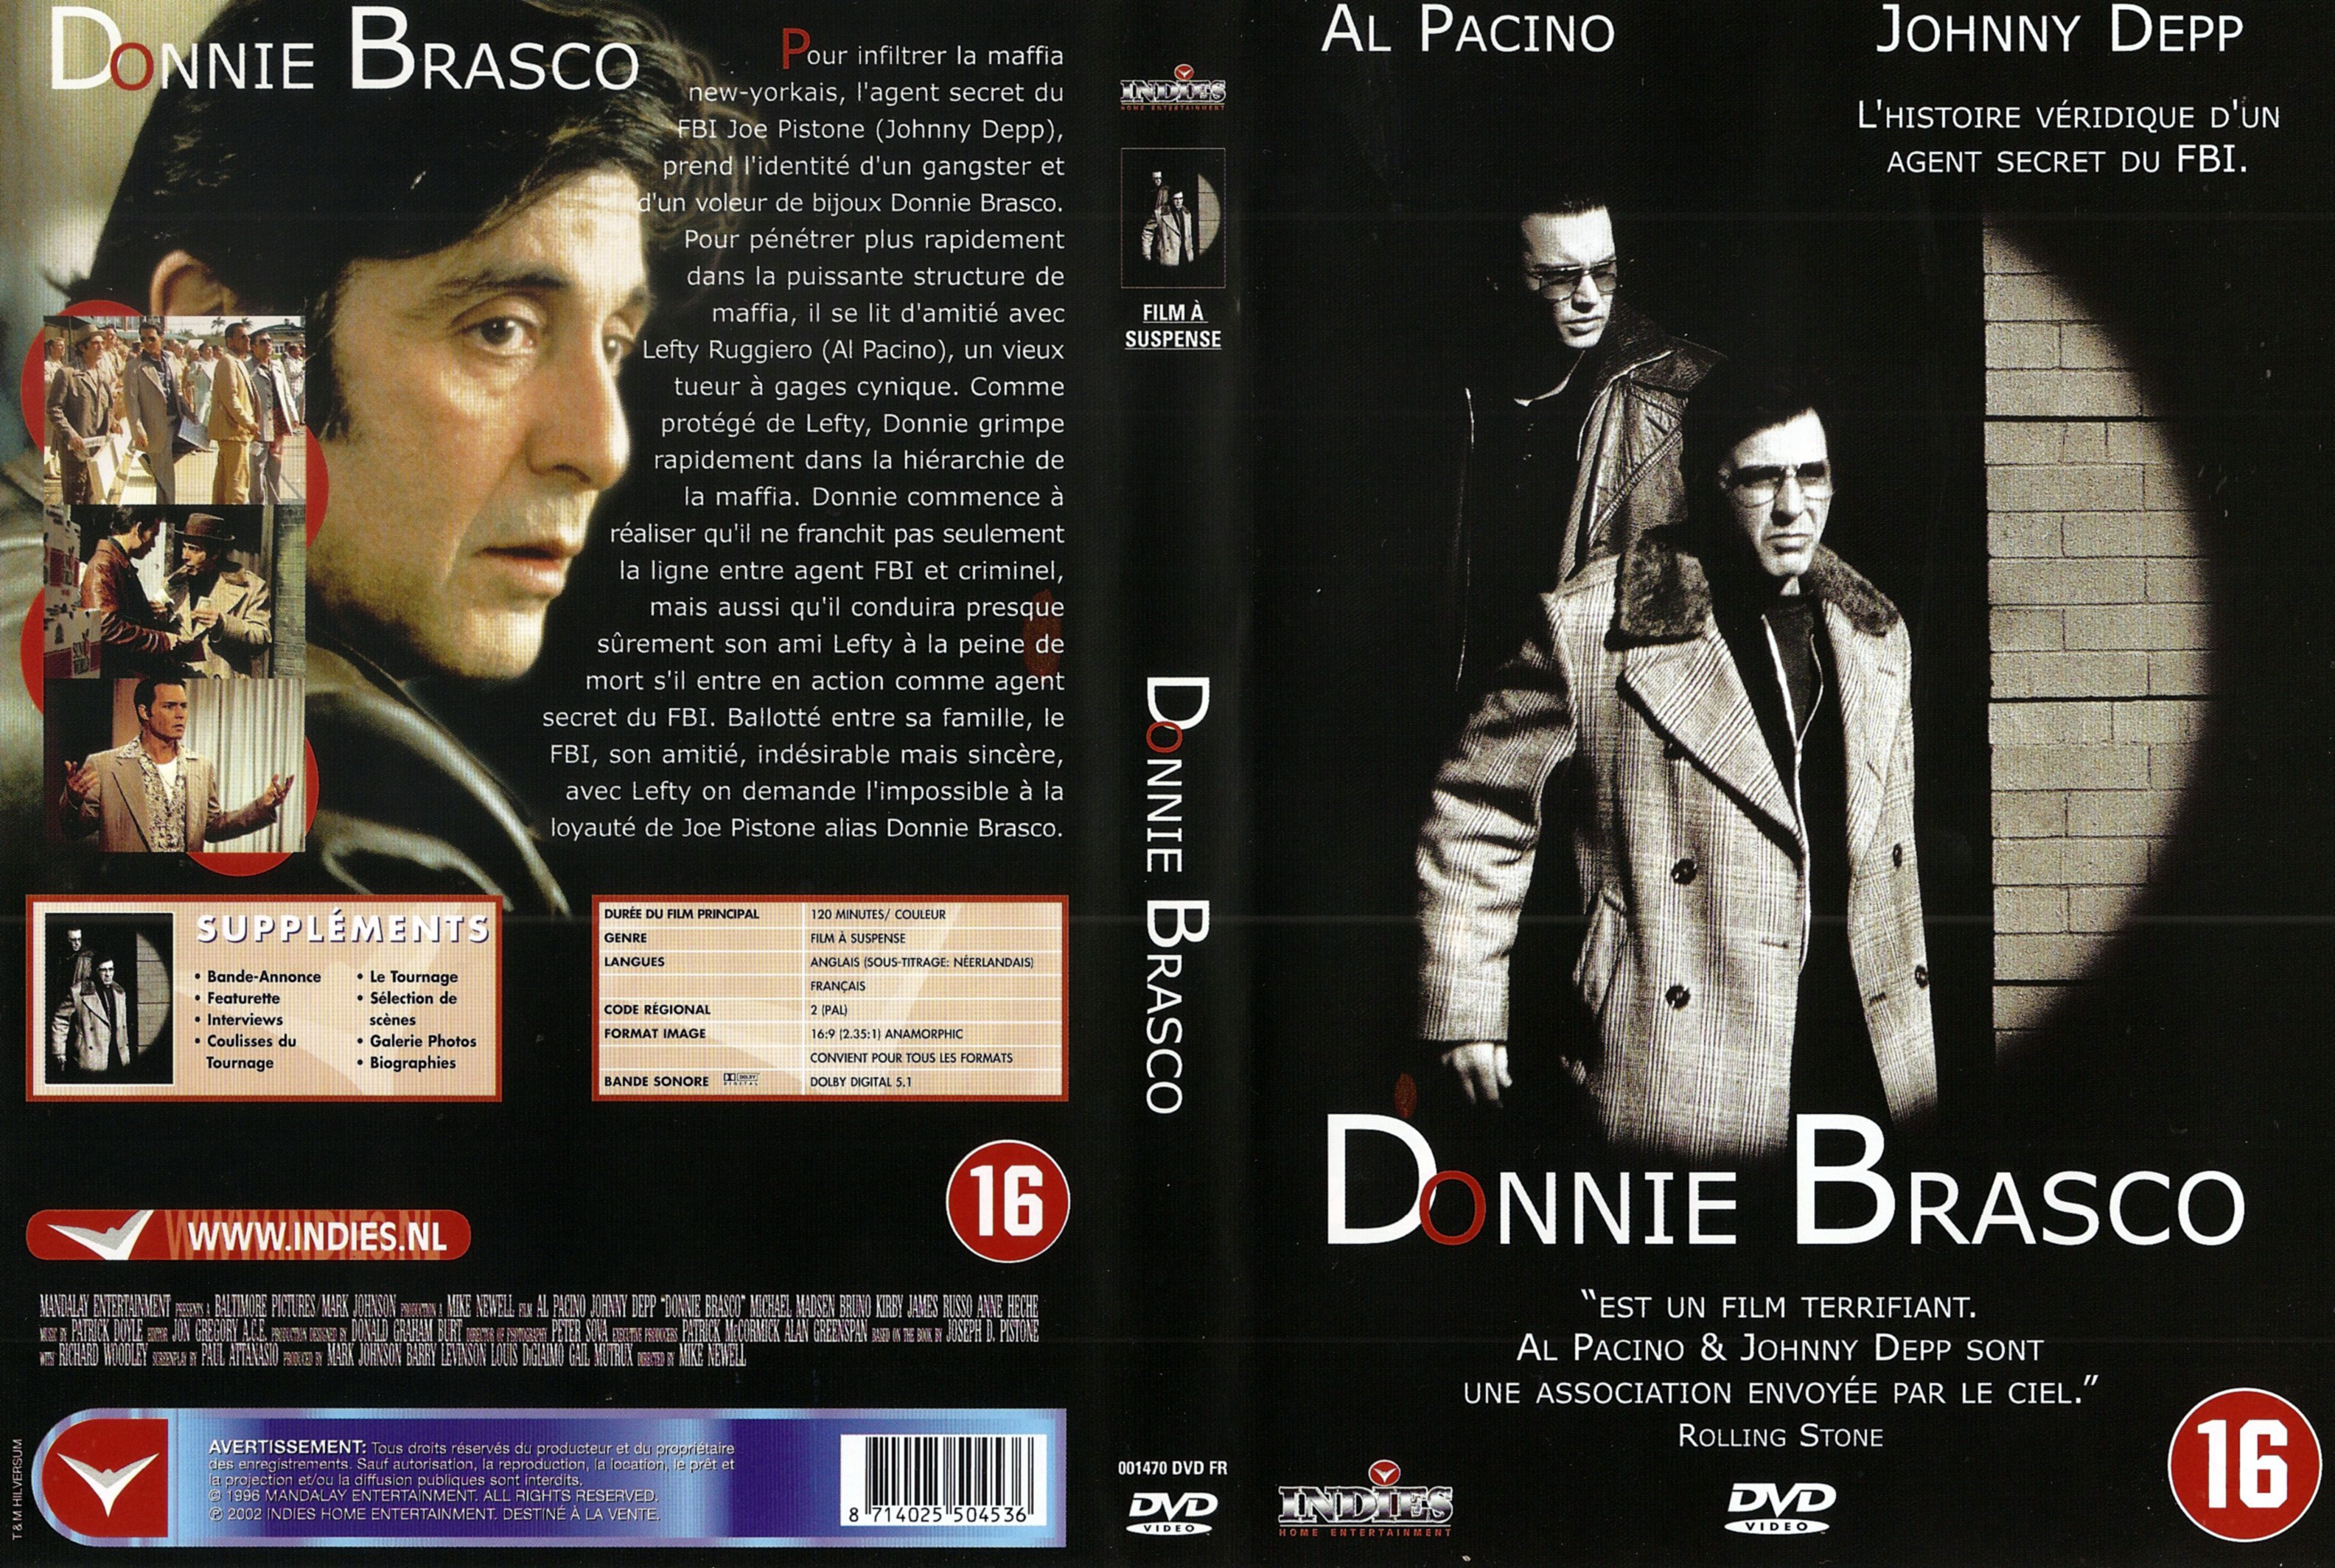 Jaquette DVD Donnie Brasco v3